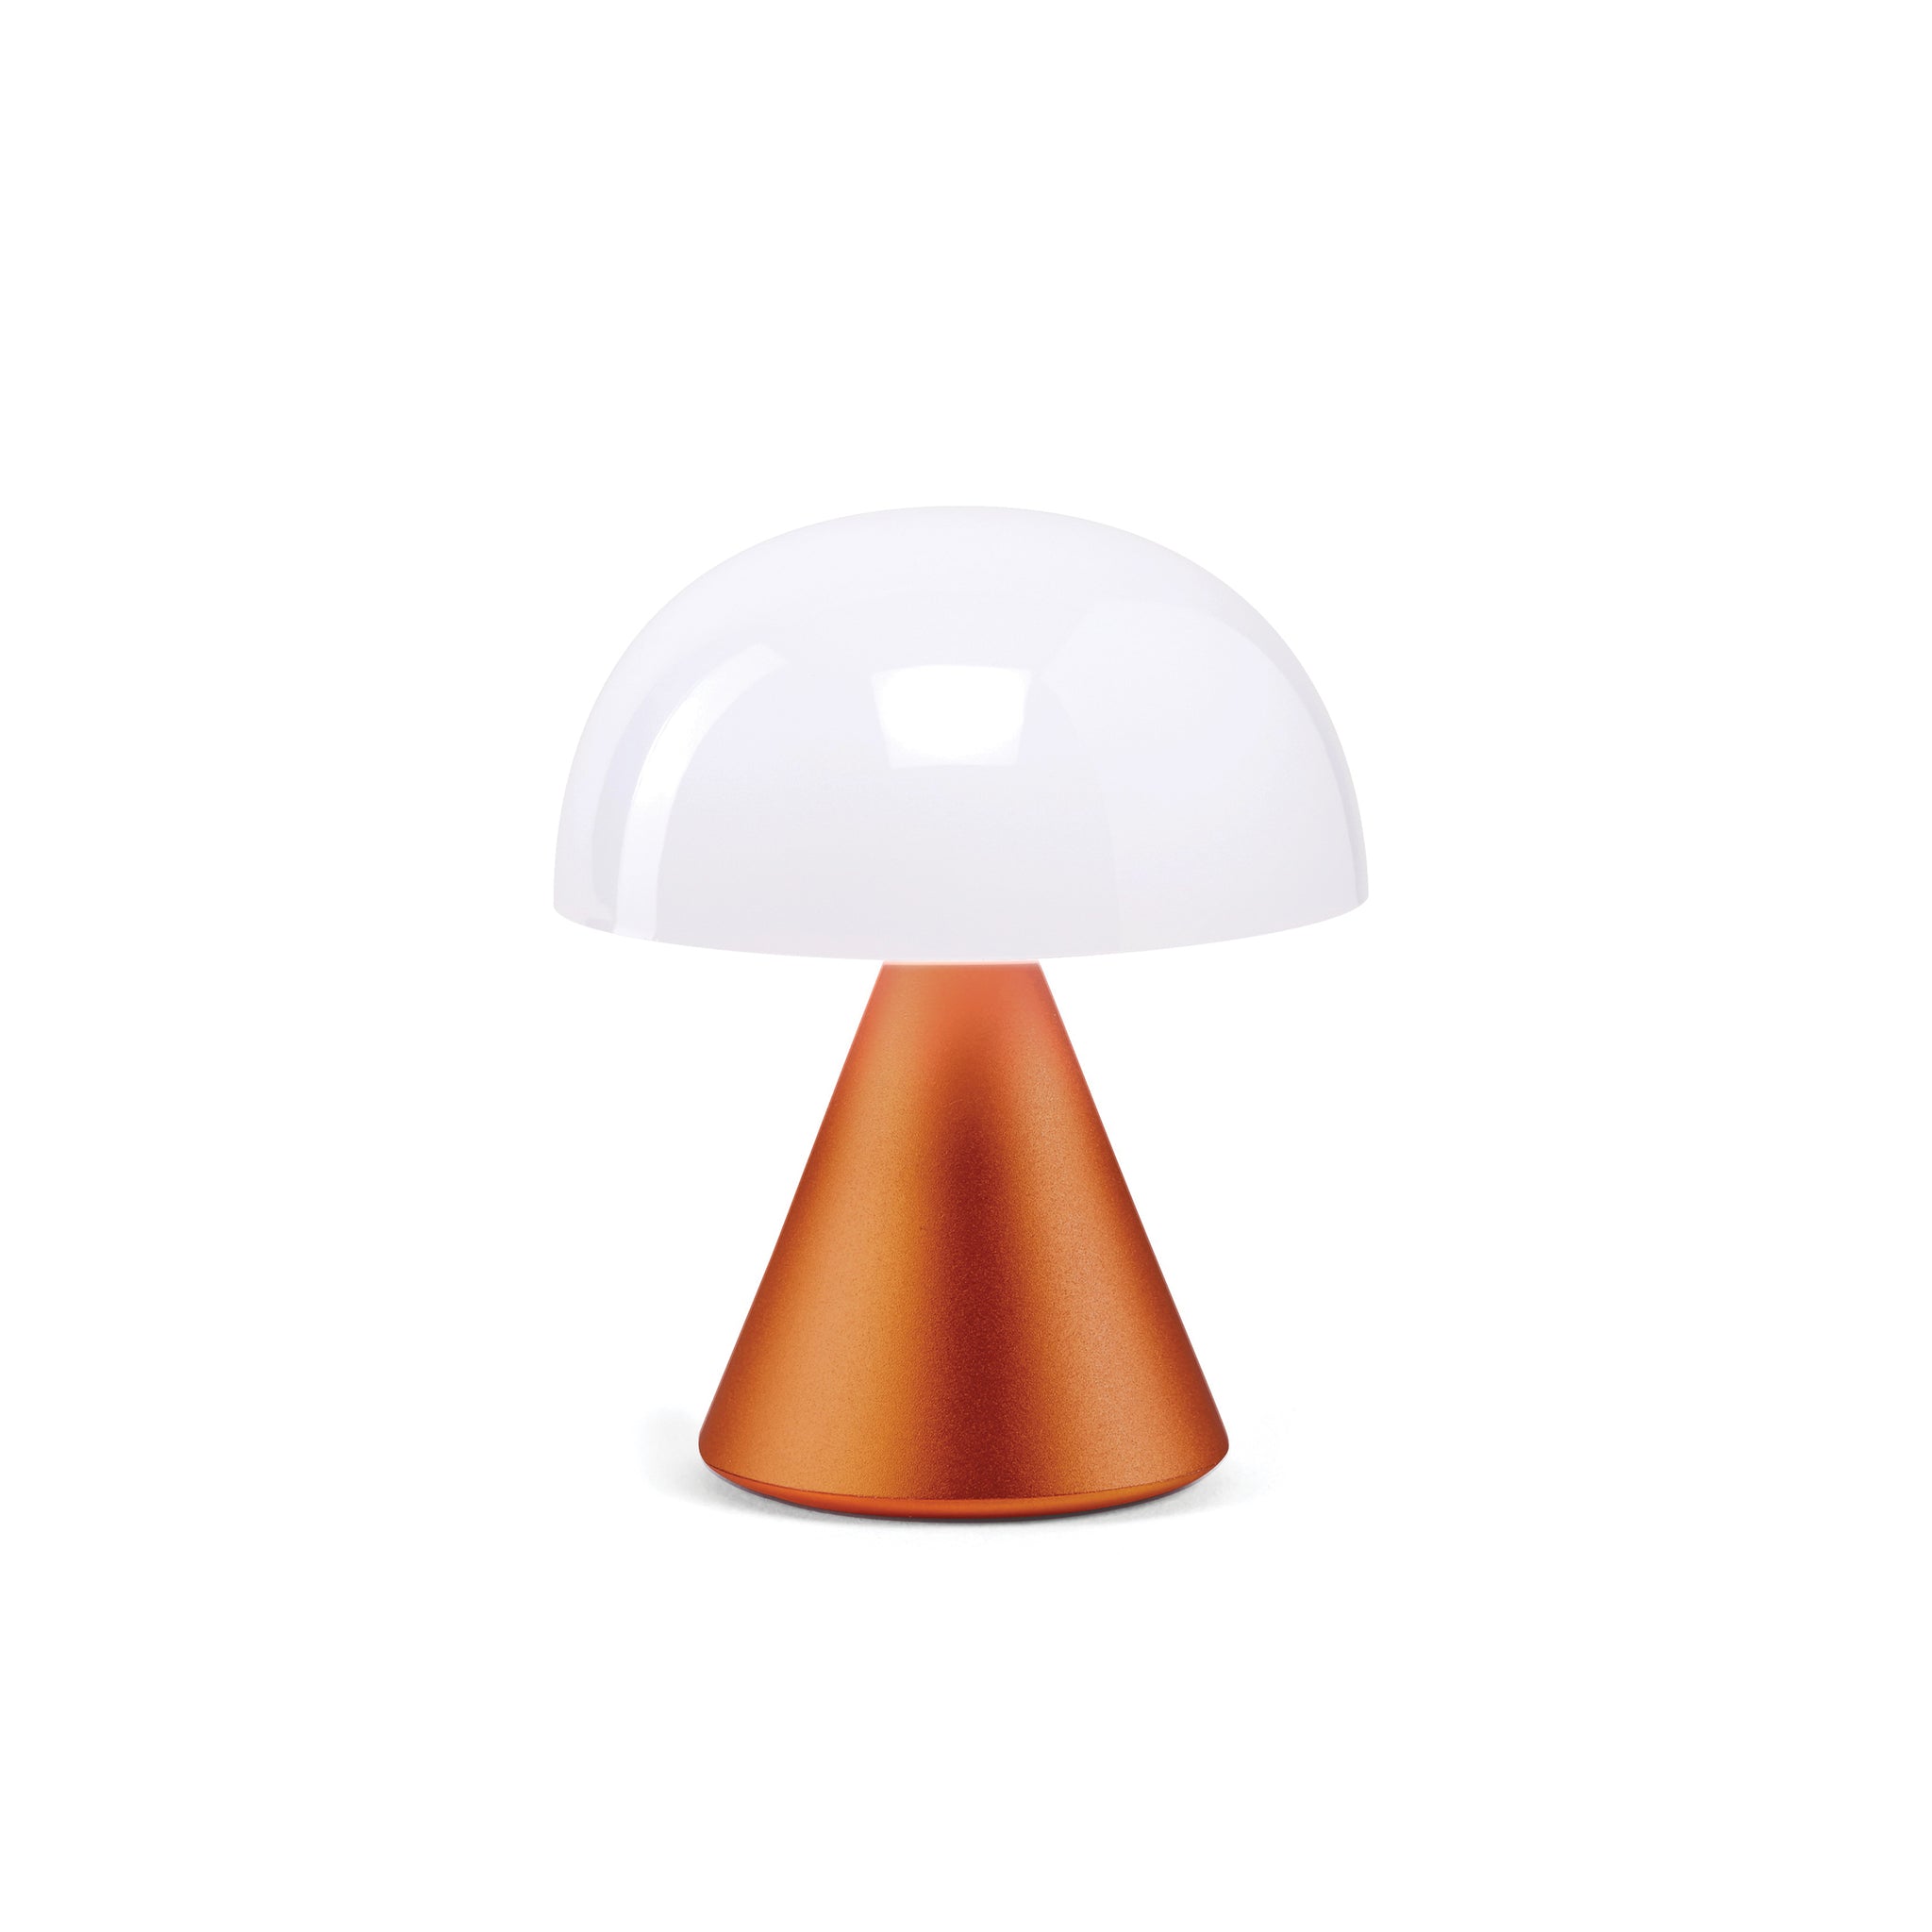 Lexon Mina Small Oranje│Oplaadbare LED-Lamp│art. LH60O1│vooraanzicht met licht uit